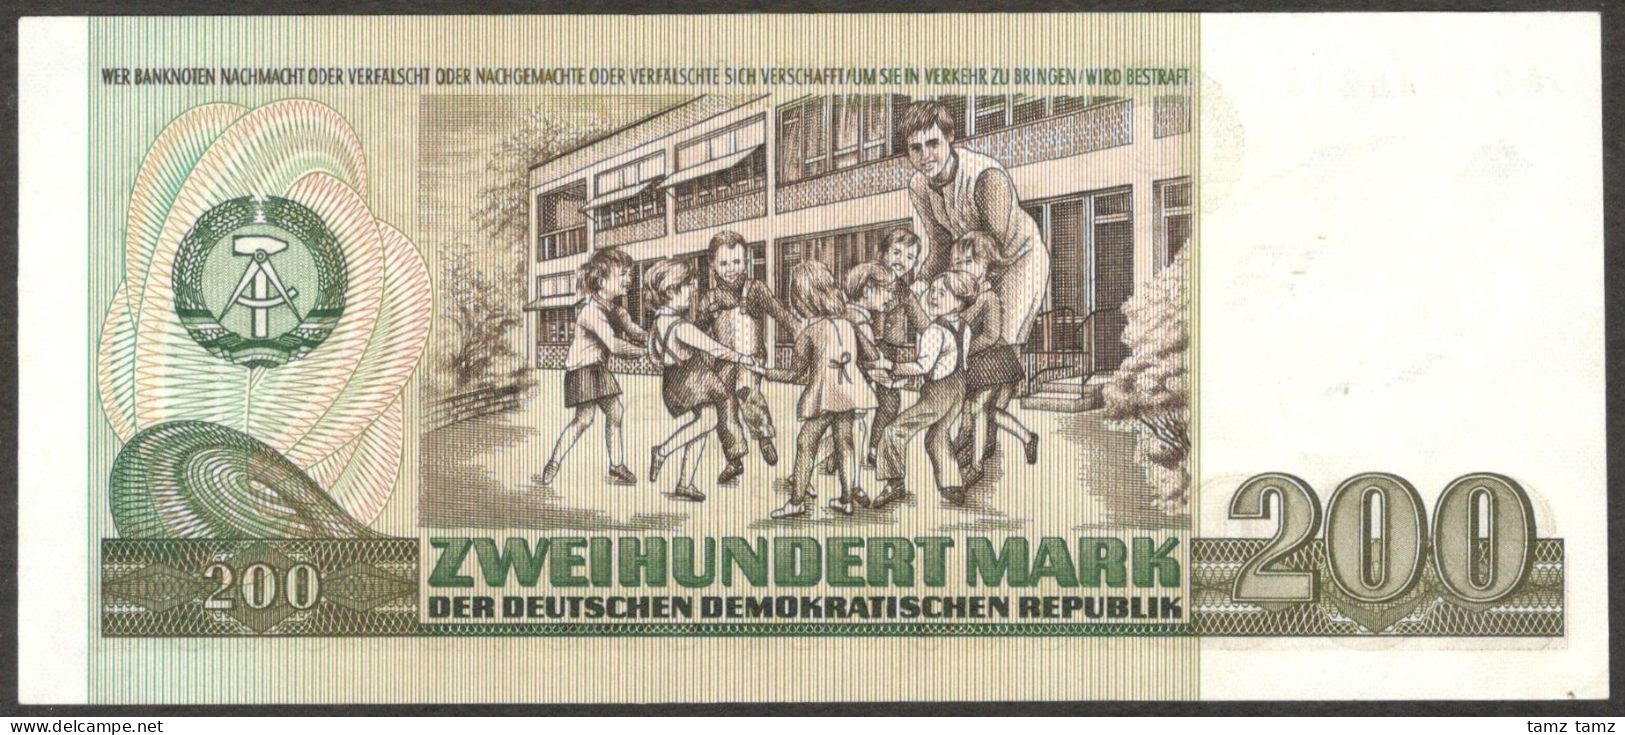 East Germany GDR Staatsbank Der DDR 200 Mark P-32 1985 UNC- - 200 Mark